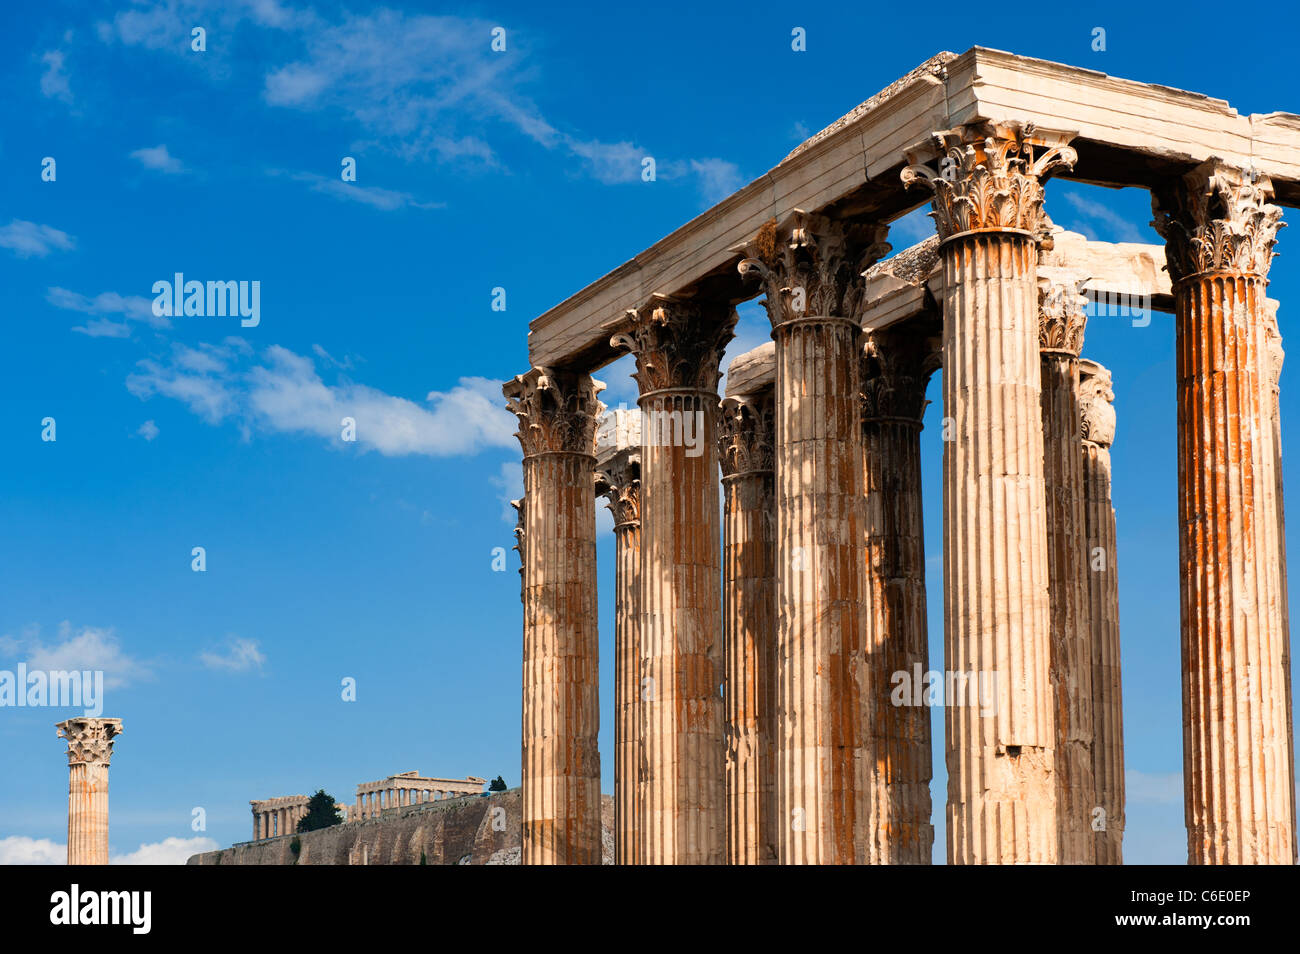 Greece, Athens, Corinthian columns of Temple of Olympian Zeus Stock Photo